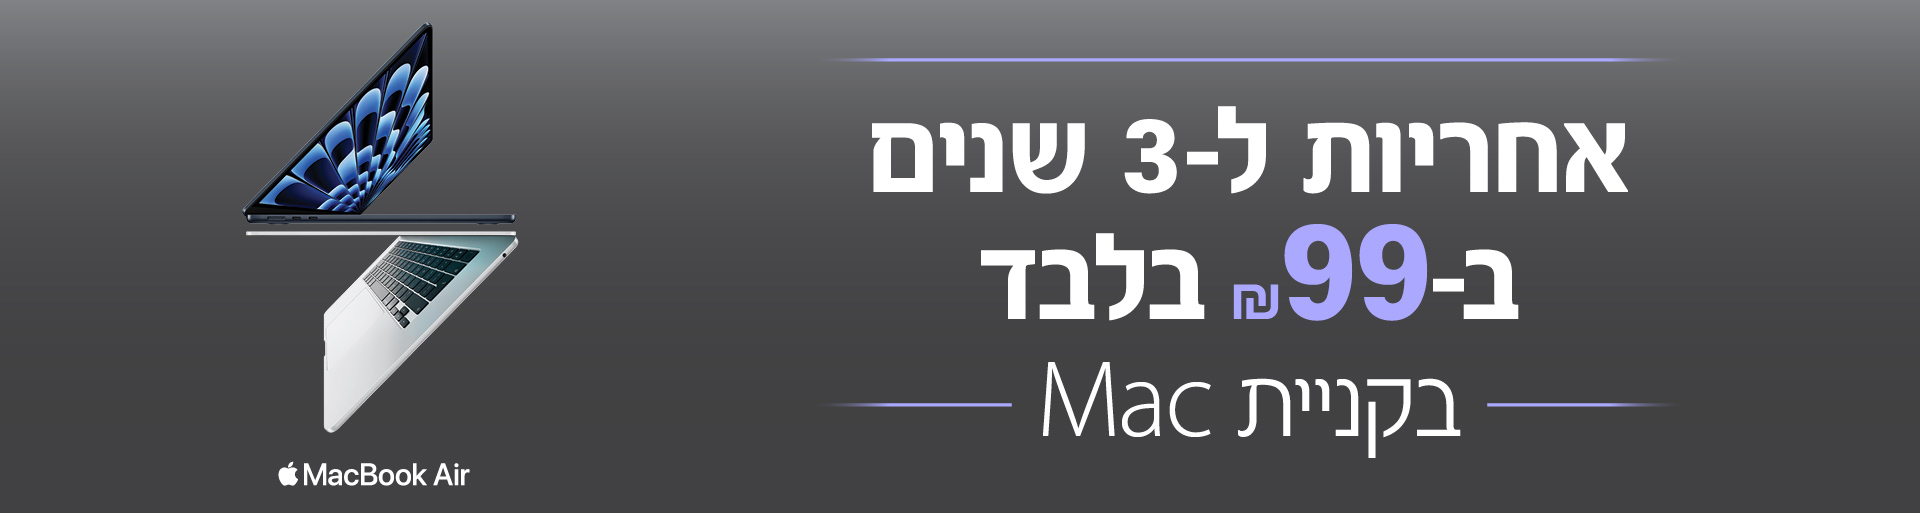 
iDigital - המומחים של Apple בישראל.
10% הנחה על מחשבי ה-Mac